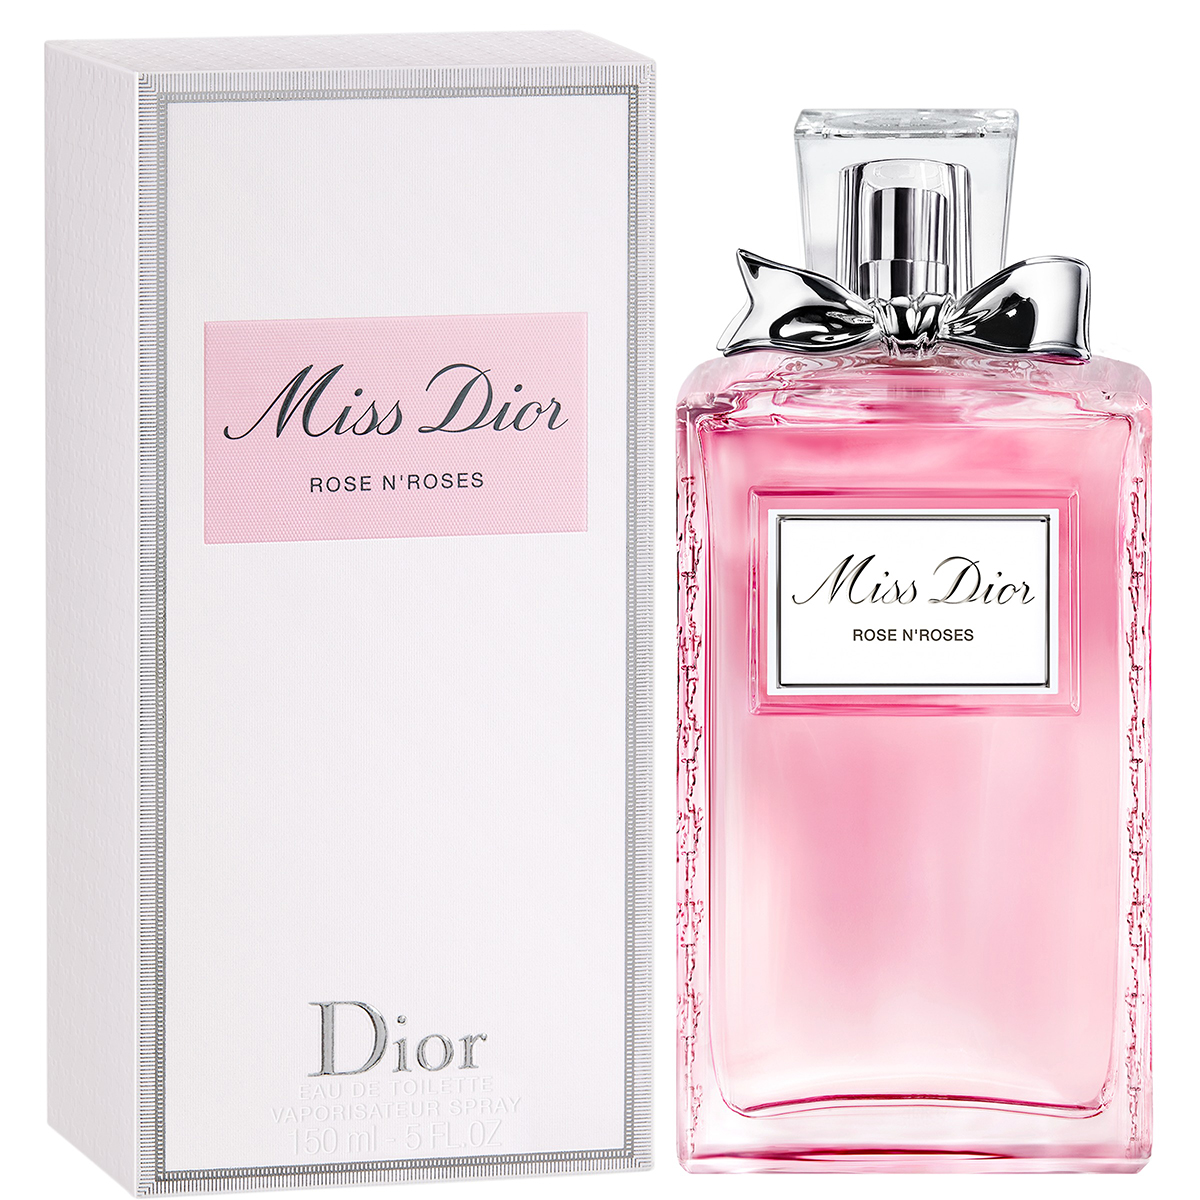 Dior Miss Dior Rose NRoses Eau De Toilette